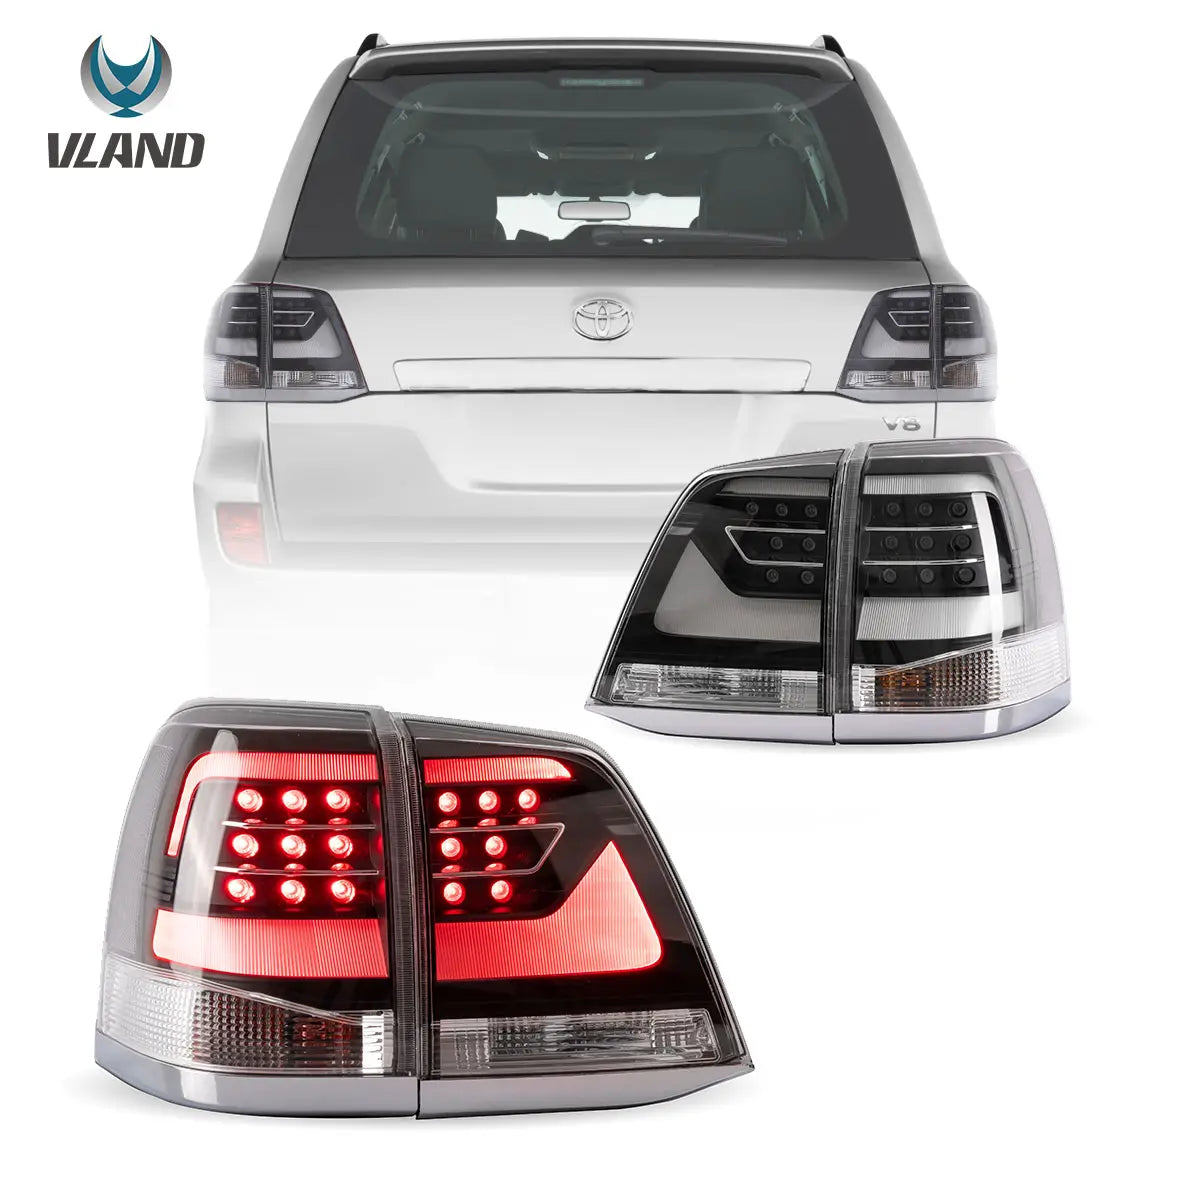 08-11 Toyota Land Cruiser 200 Series Vland LED Tail Light with Amber Turn Signal